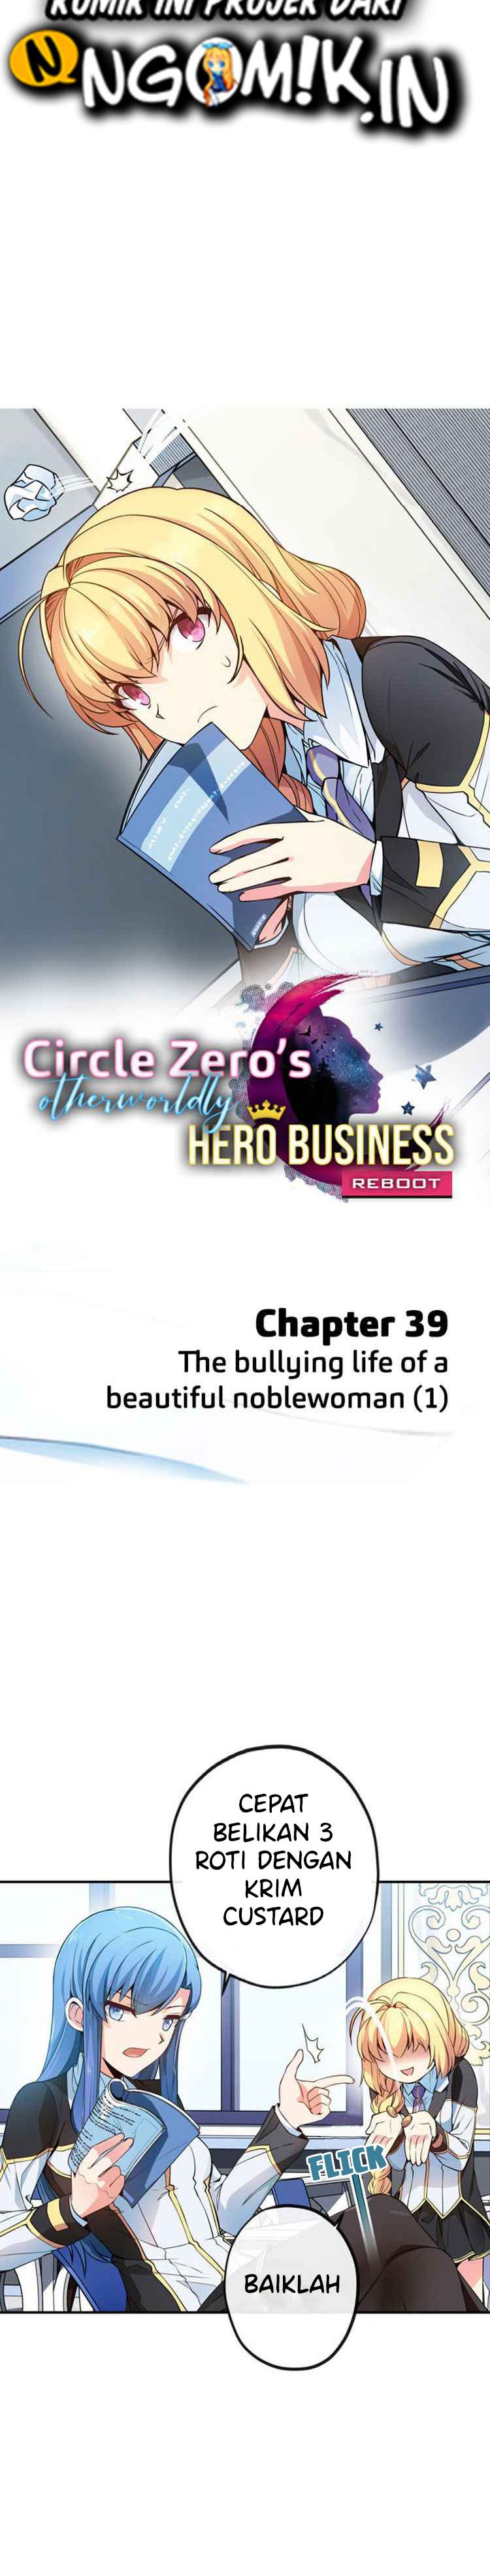 Circle Zero’s Otherworldly Hero Business: Reboot Chapter 39